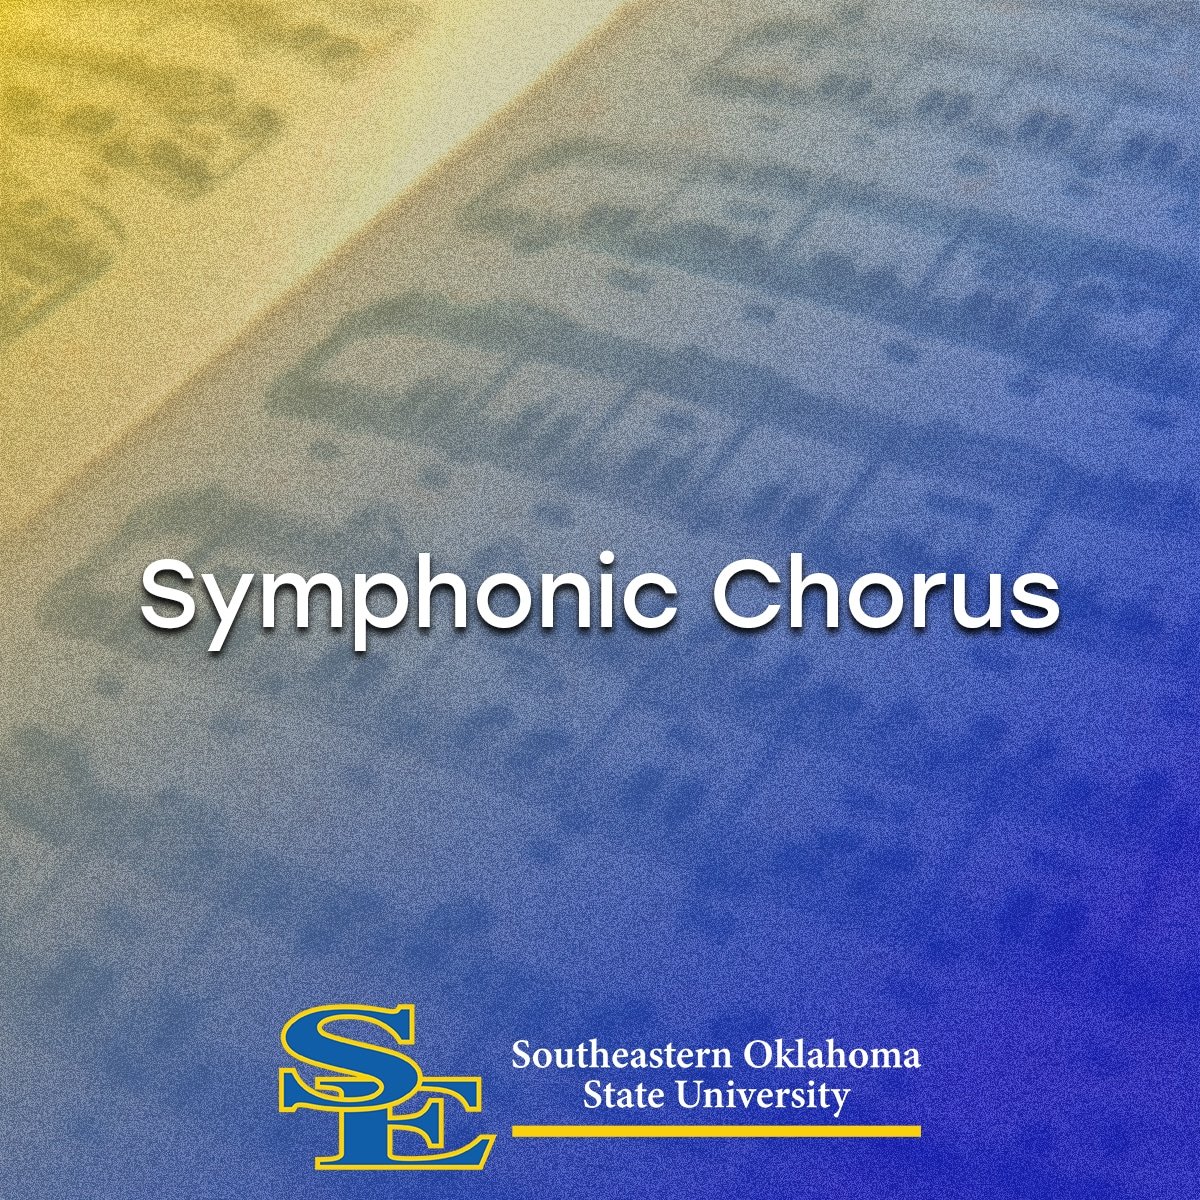 Symphonic Chorus banner